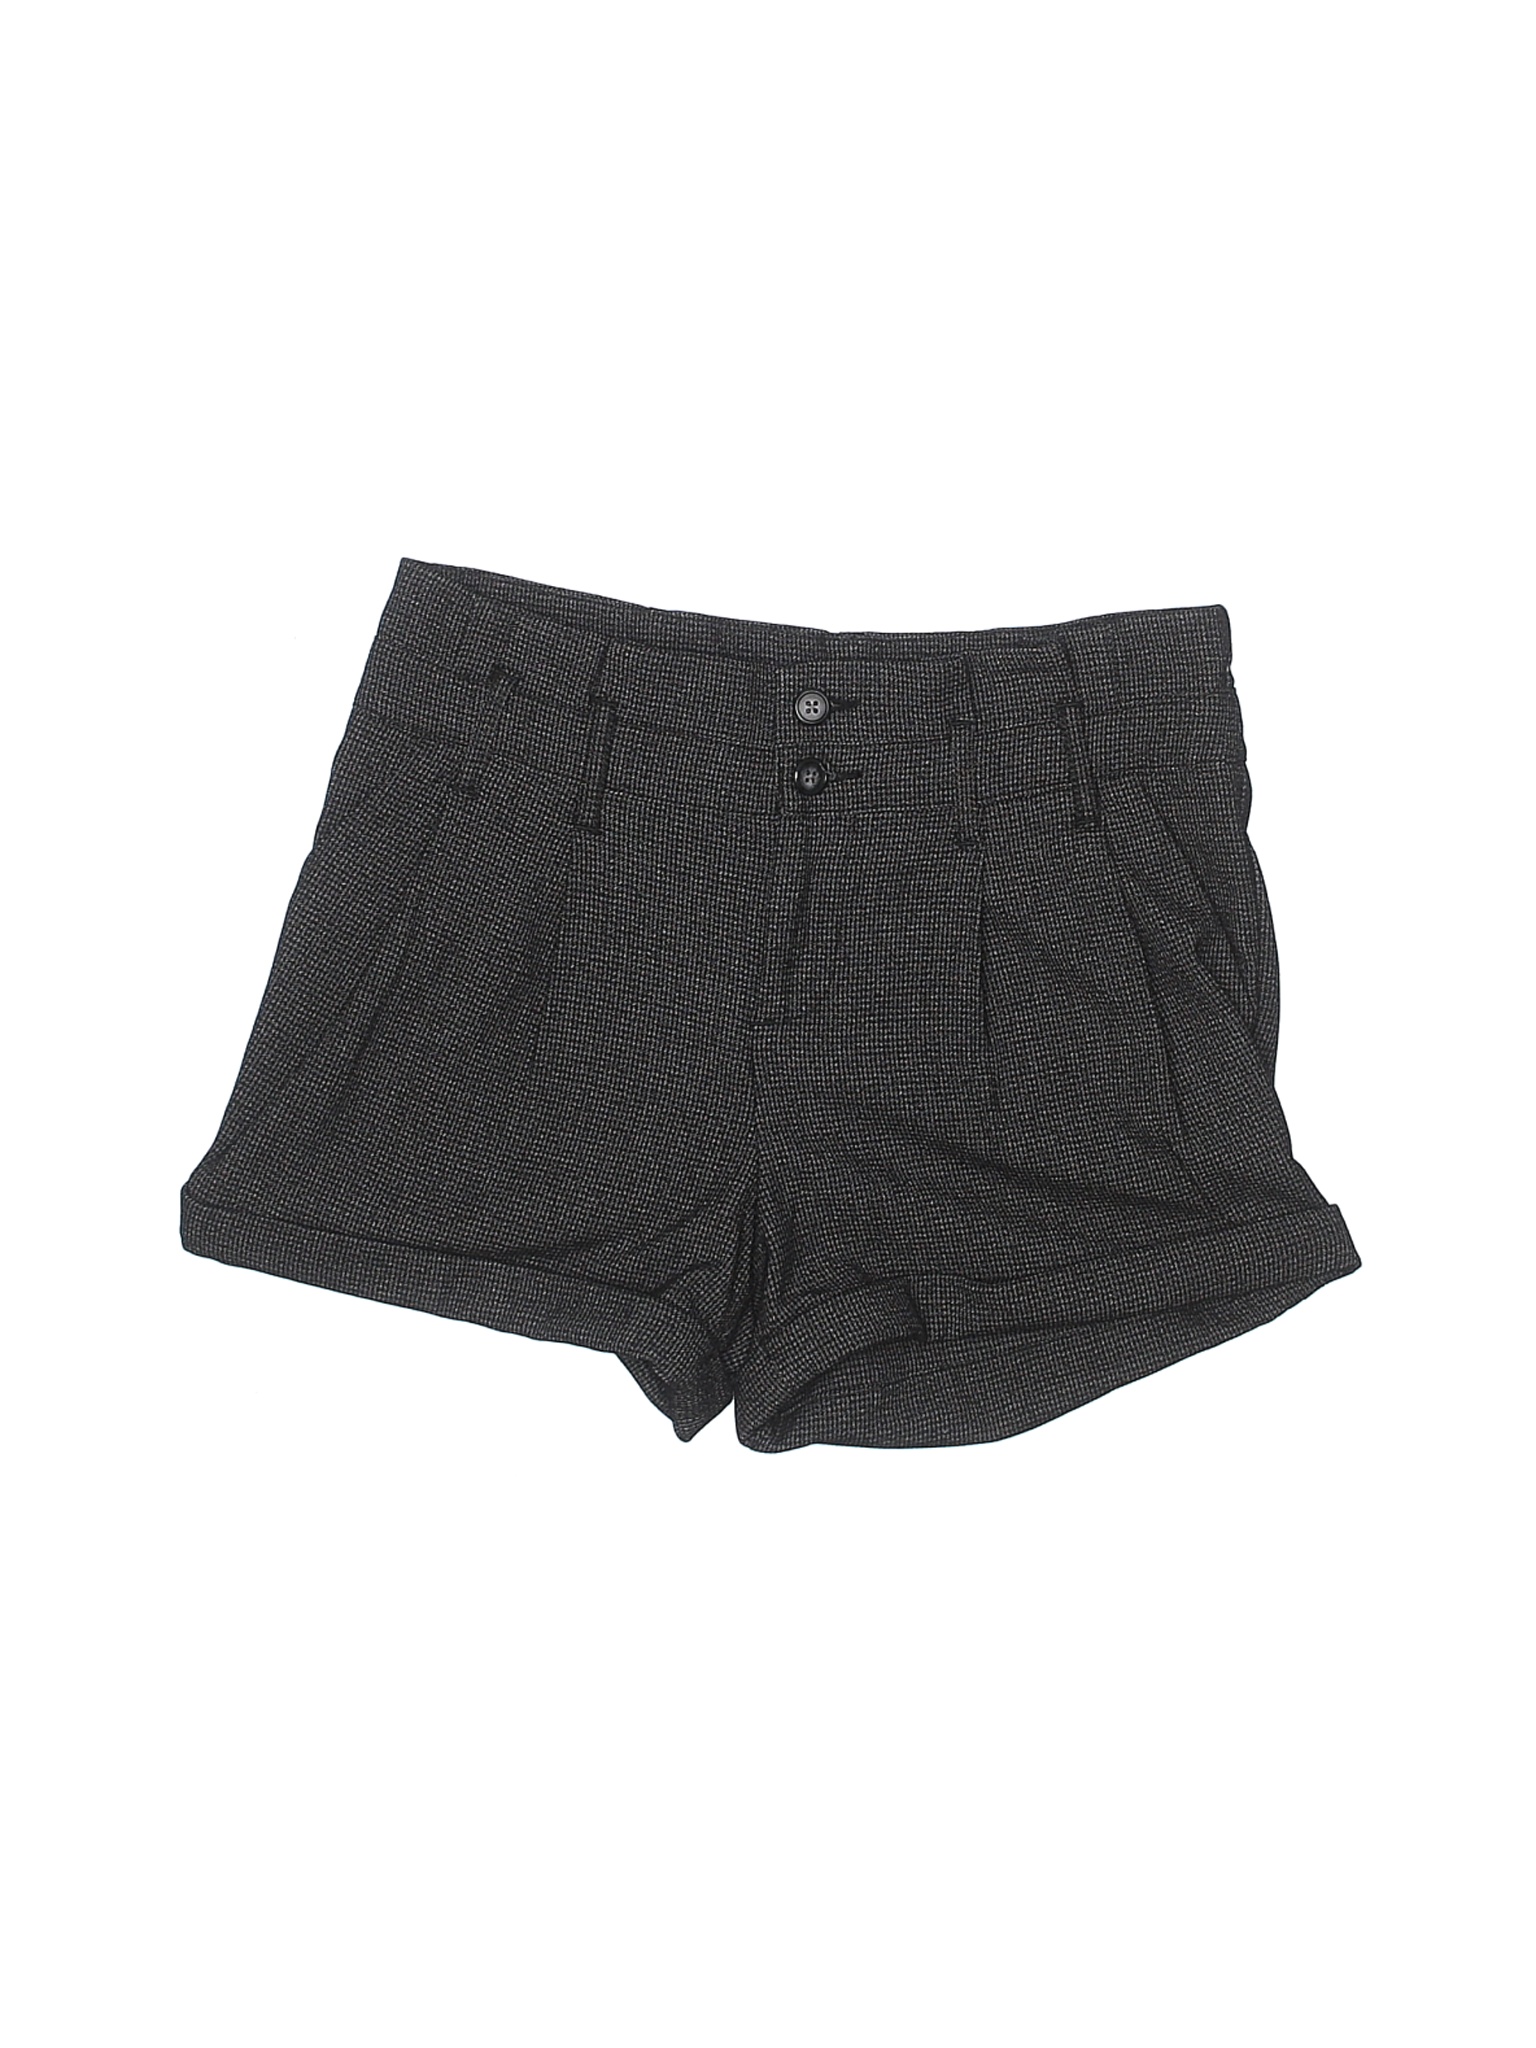 Free People Women Black Dressy Shorts 4 | eBay